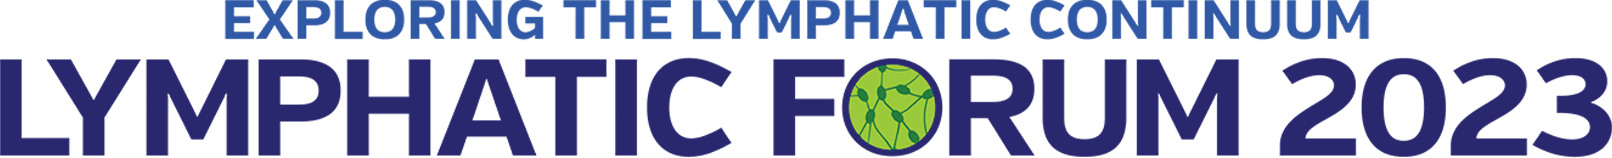 Lymphatic_Forum_2023_Logo